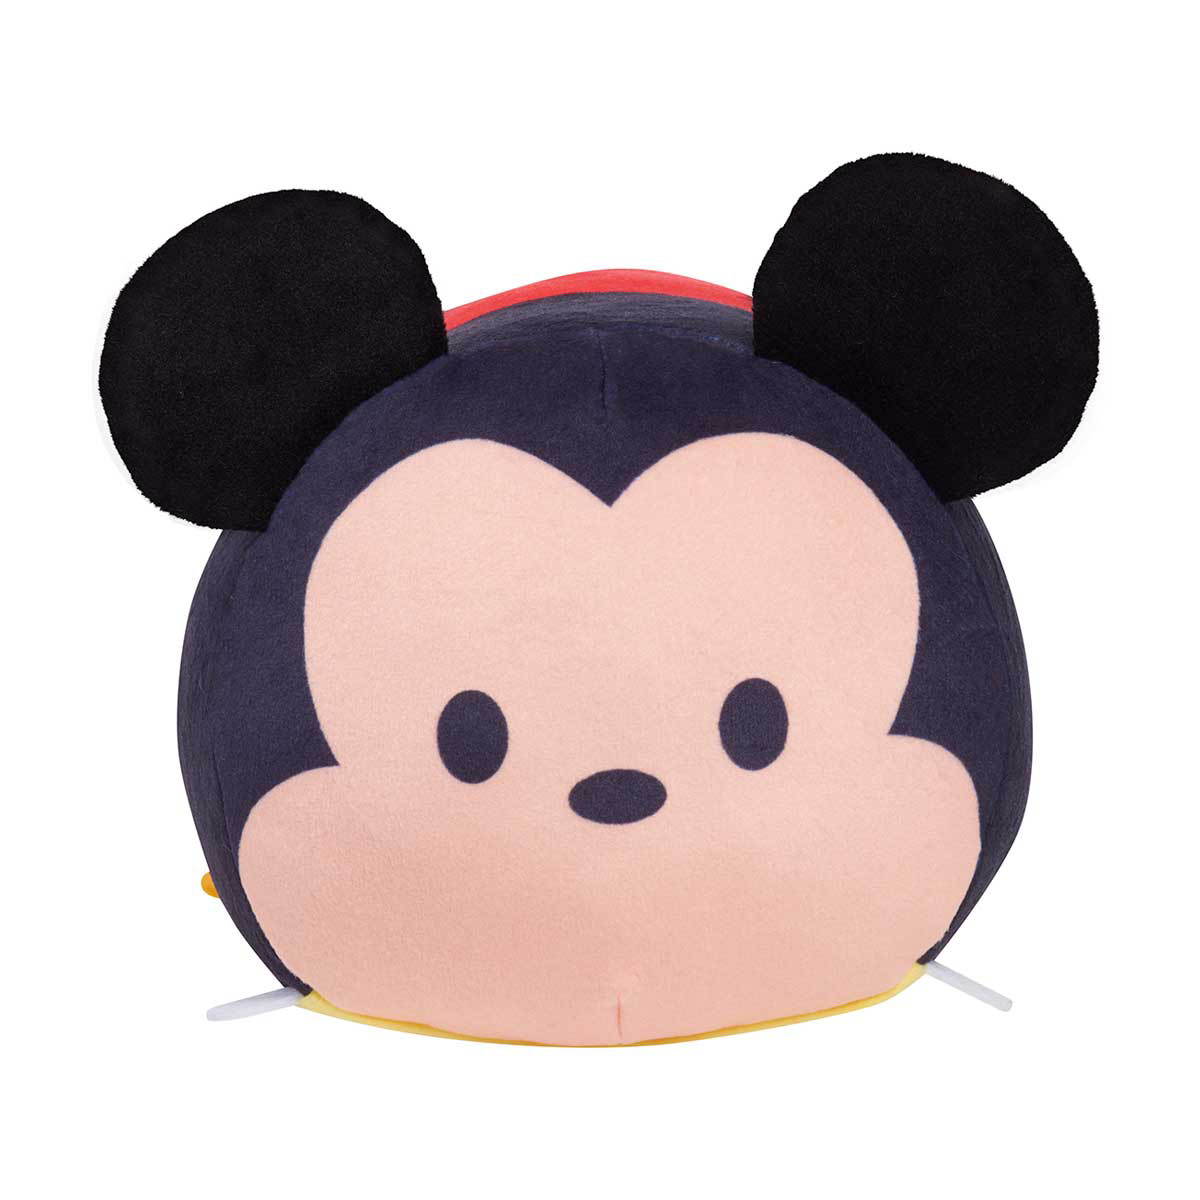 Disney Tsum Tsum Medium Cuddle Plush Toy